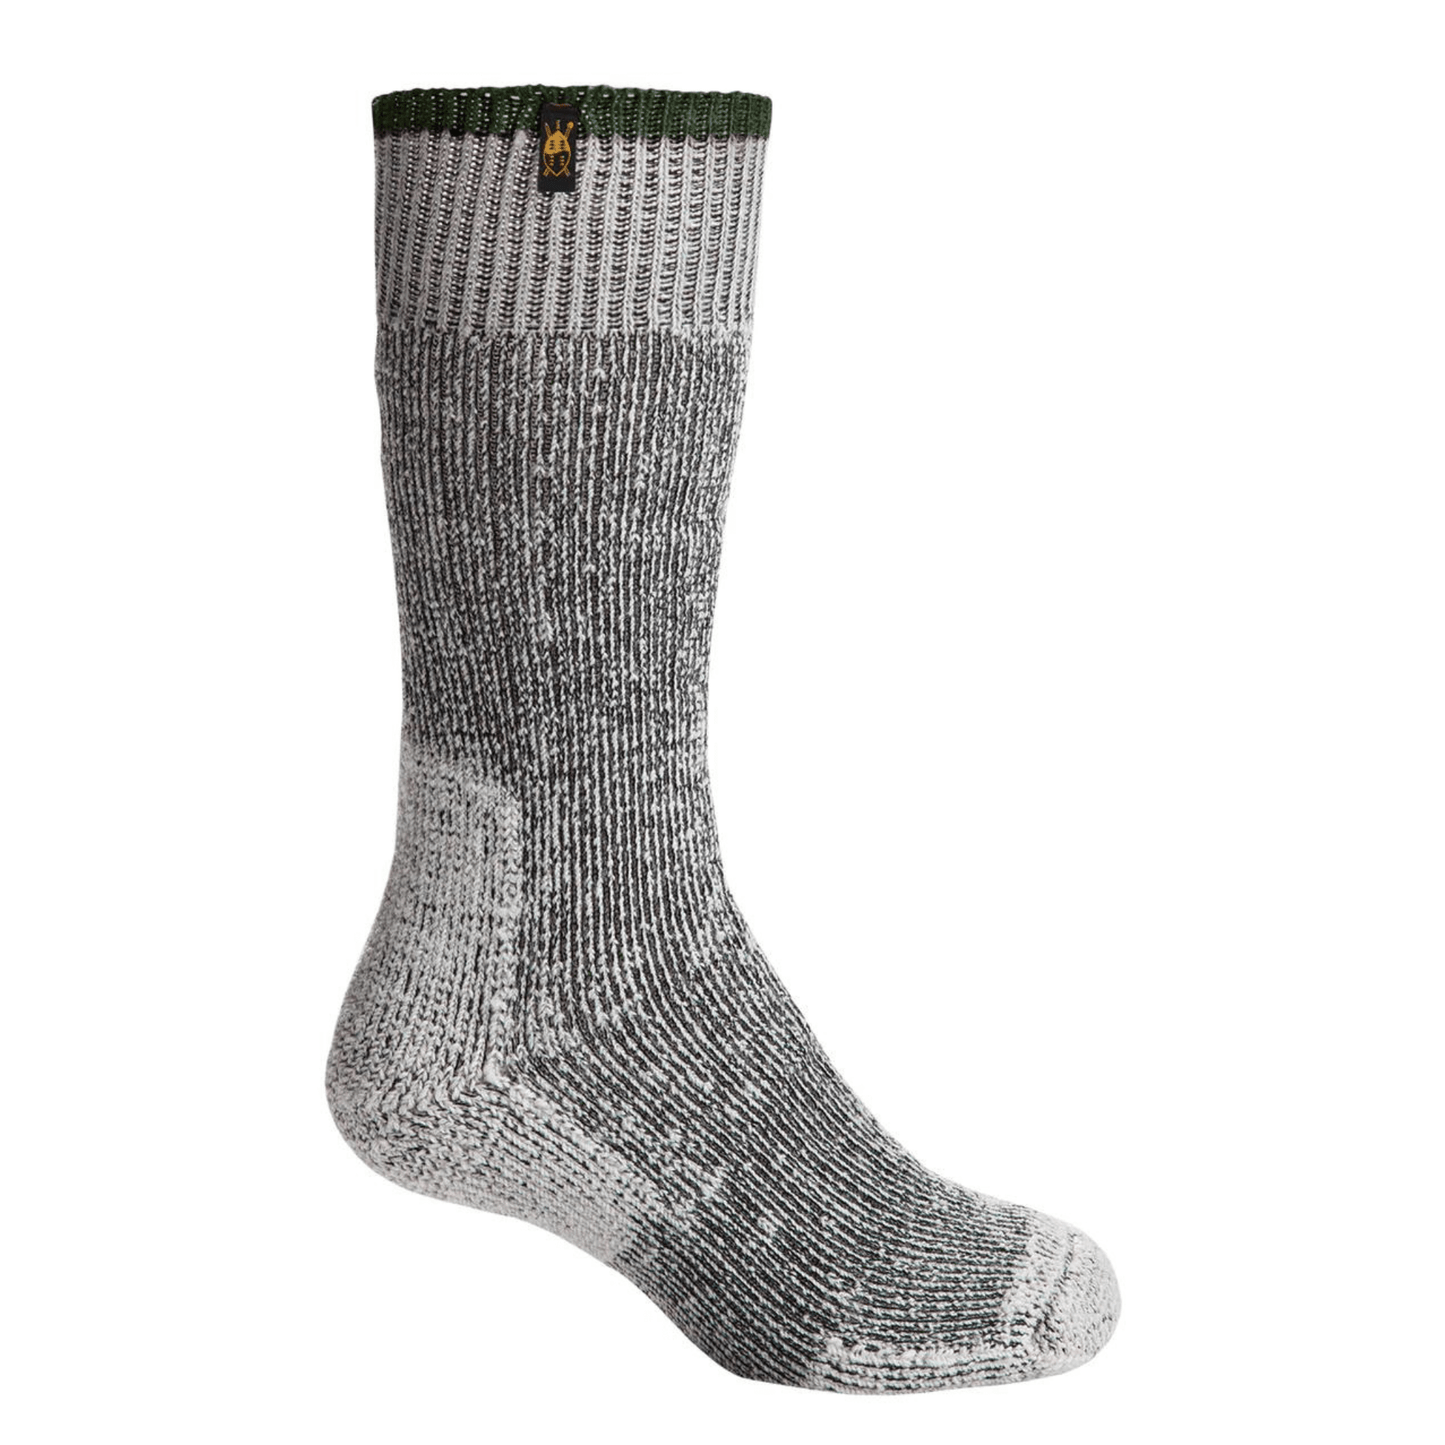 Swazi The Farm Sock - Merino Wool Socks from Swazi Clothing.